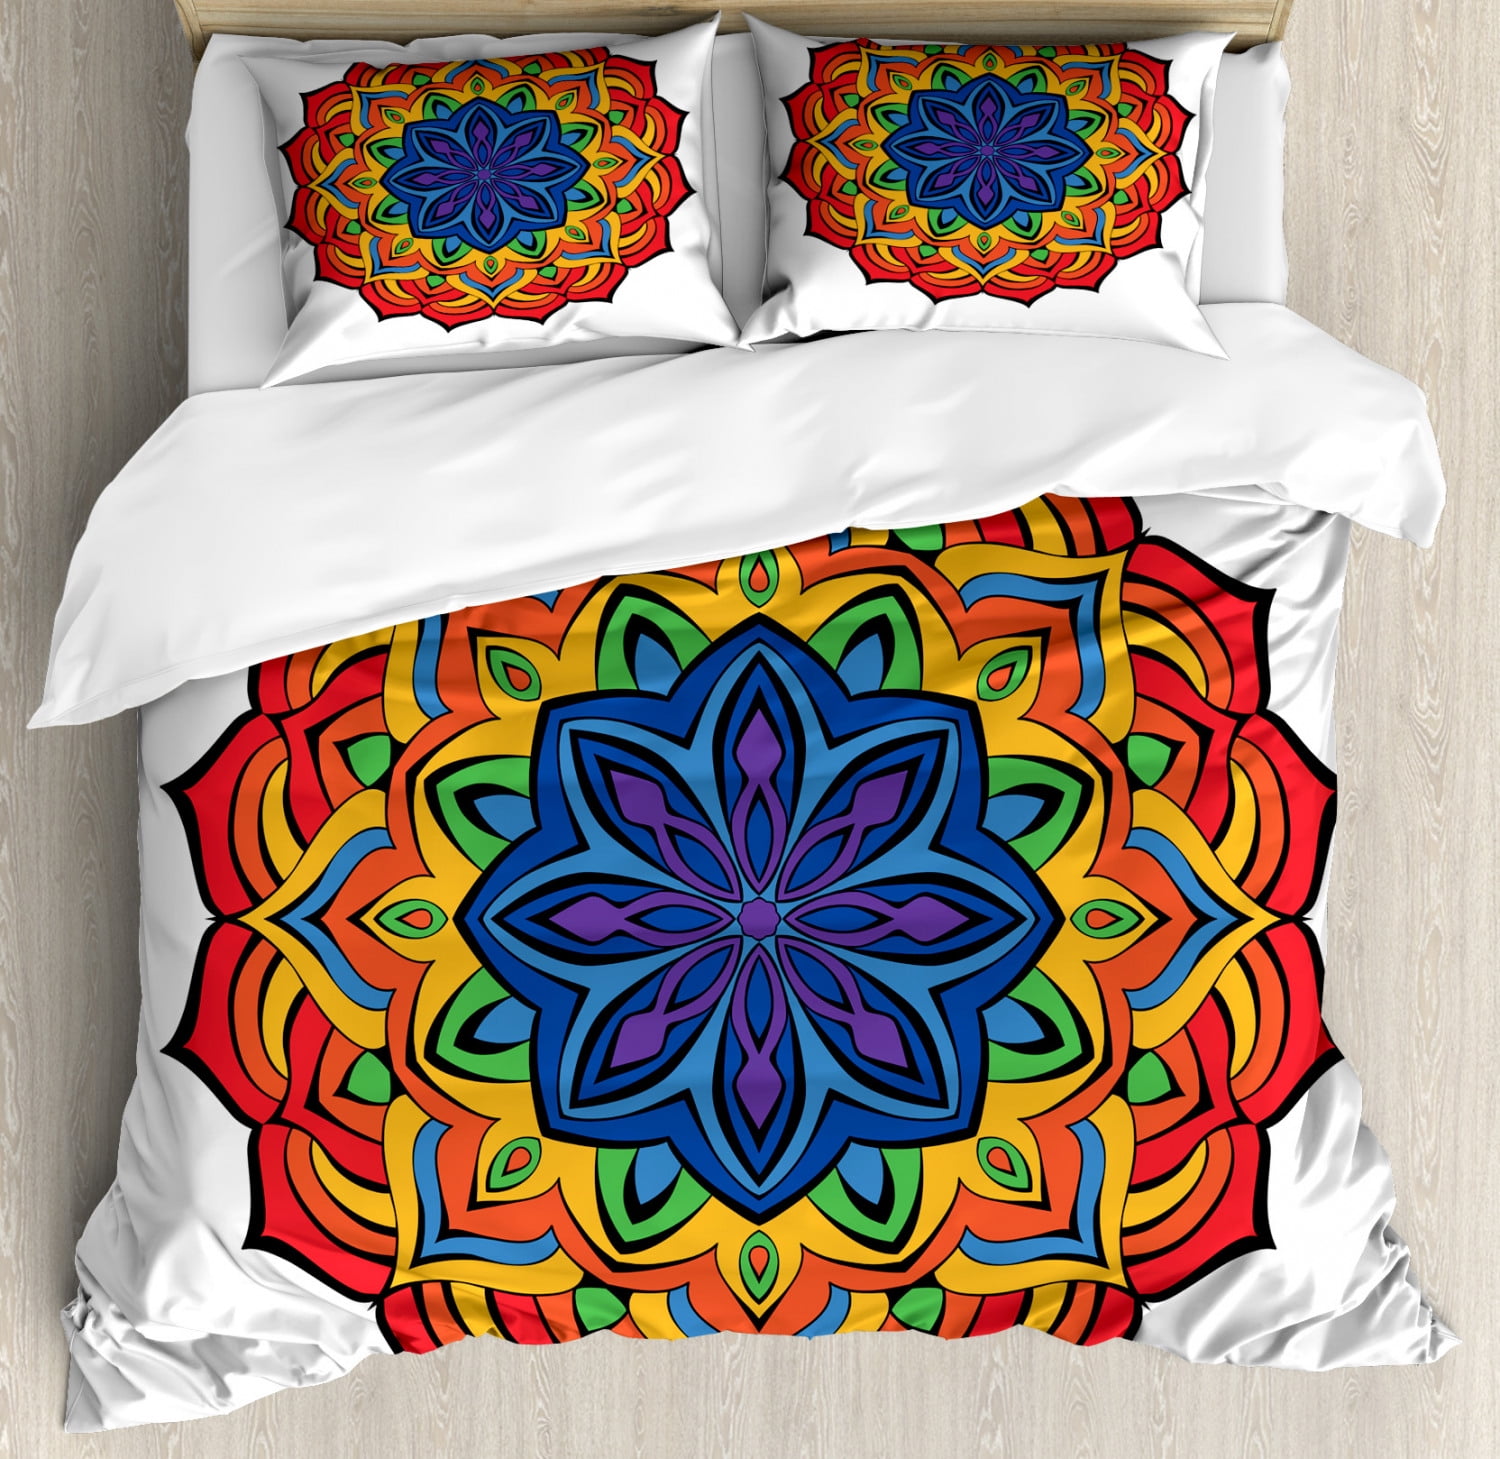 Rainbow Mandala Pillow Sham Decorative Pillowcase 3 Sizes for Bedroom Decor 